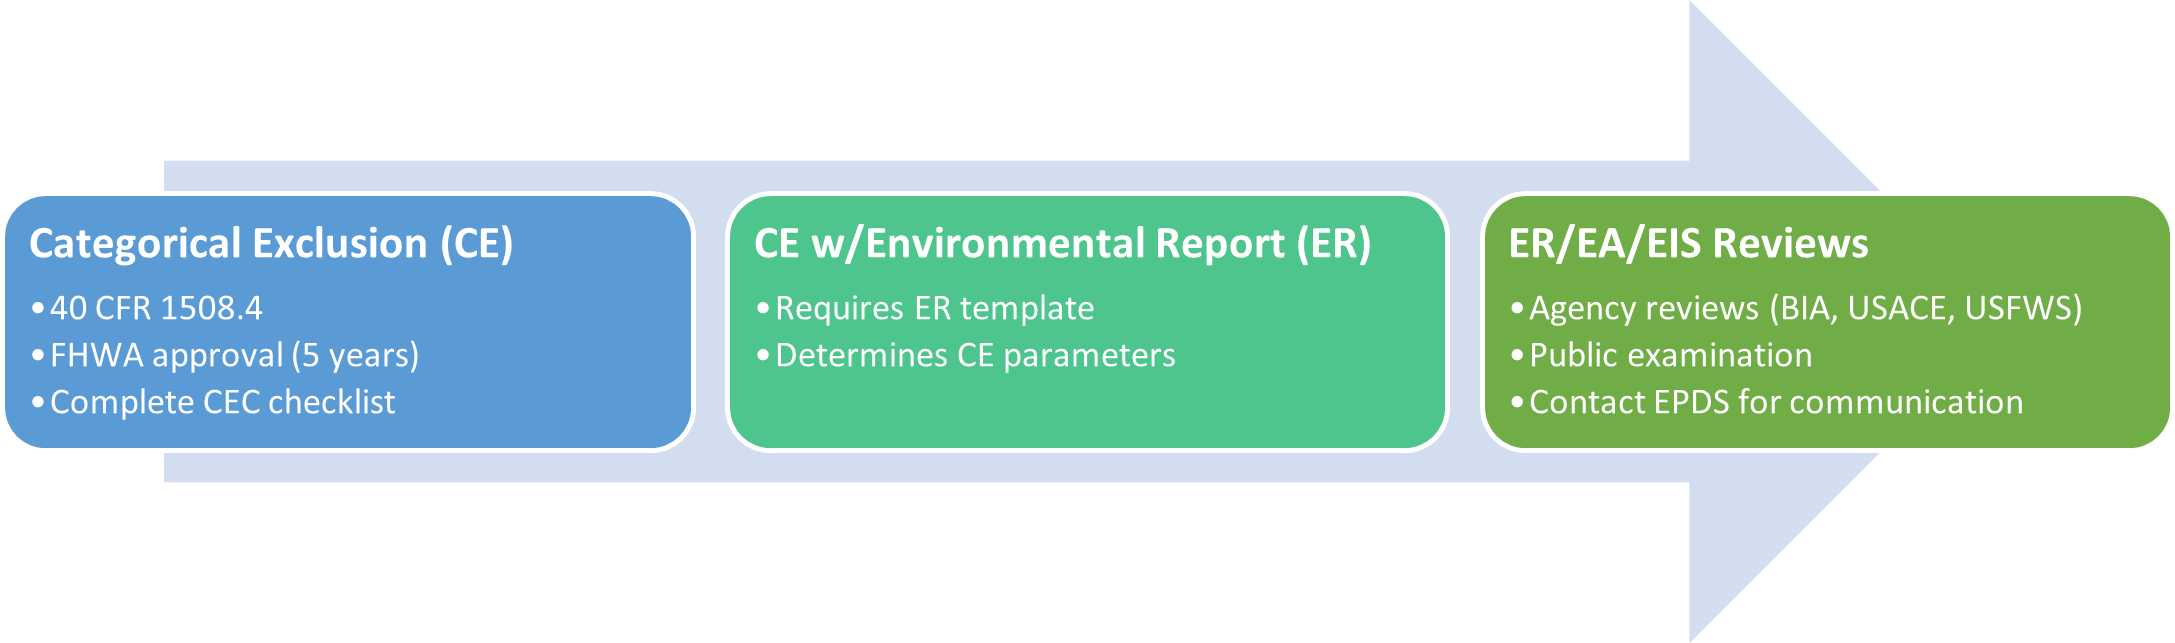 Environmental document types